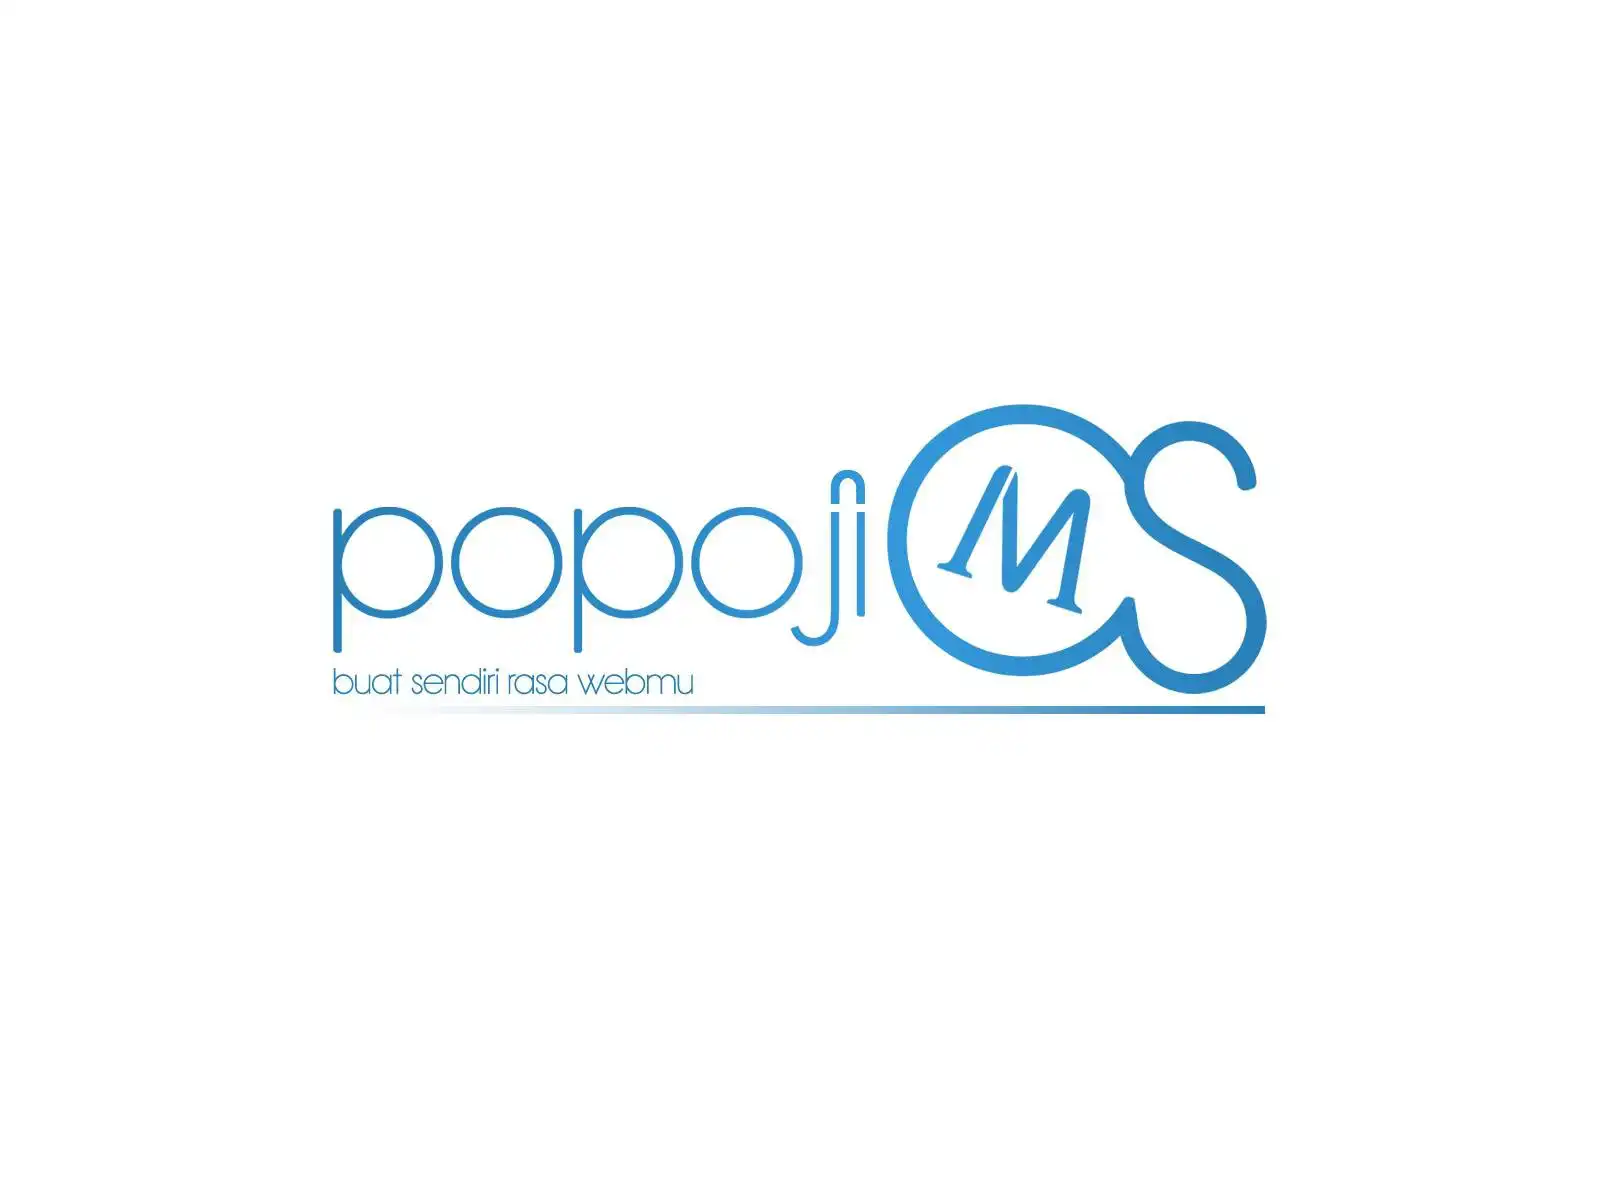 Download web tool or web app PopojiCMS